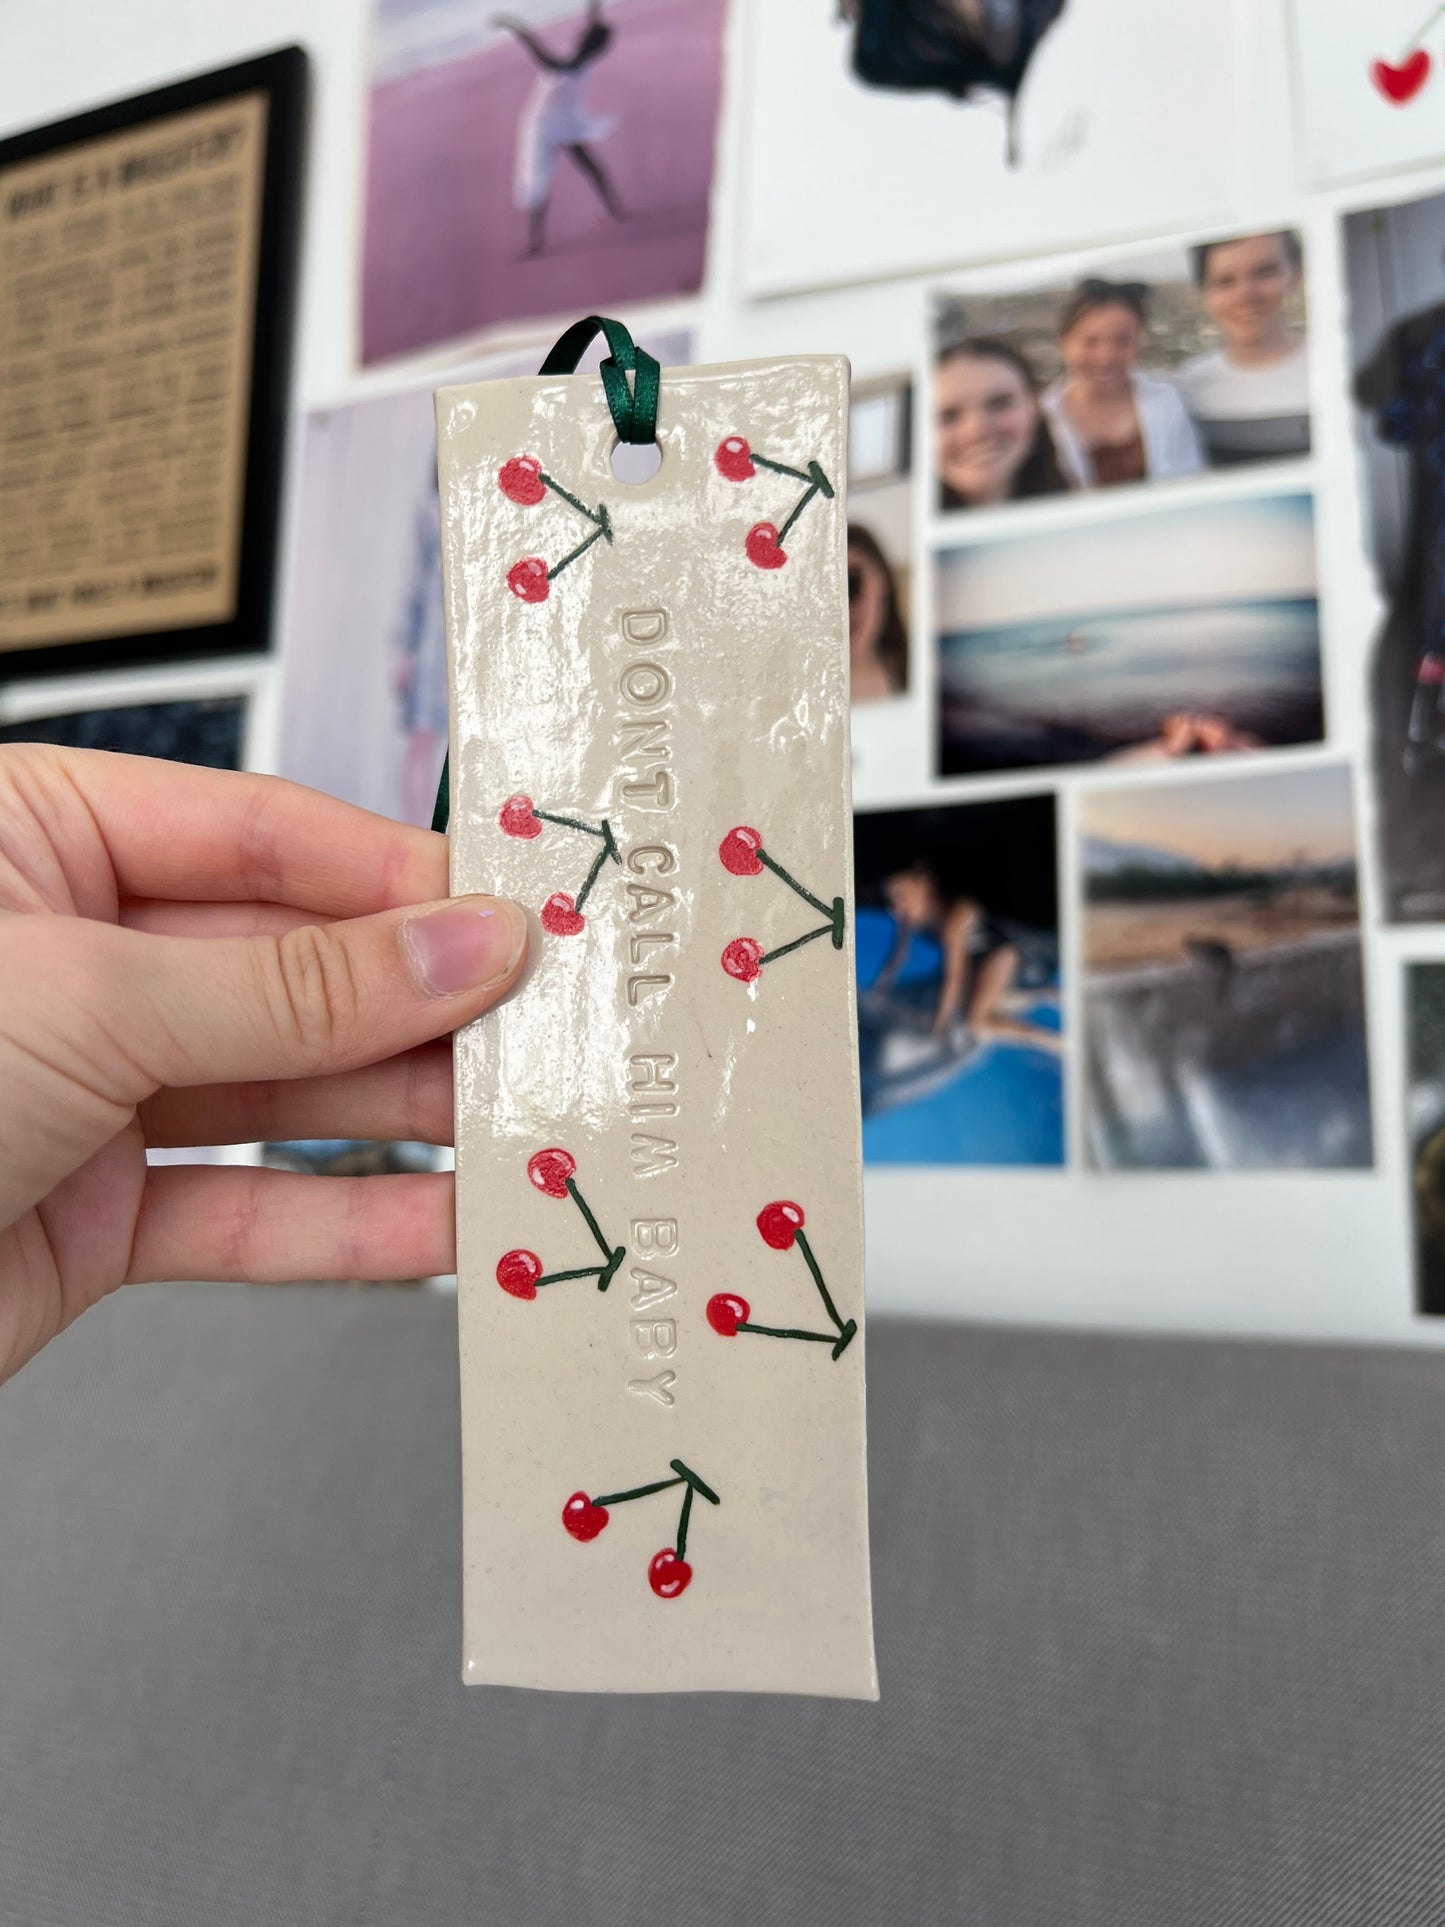 The cherry bookmark